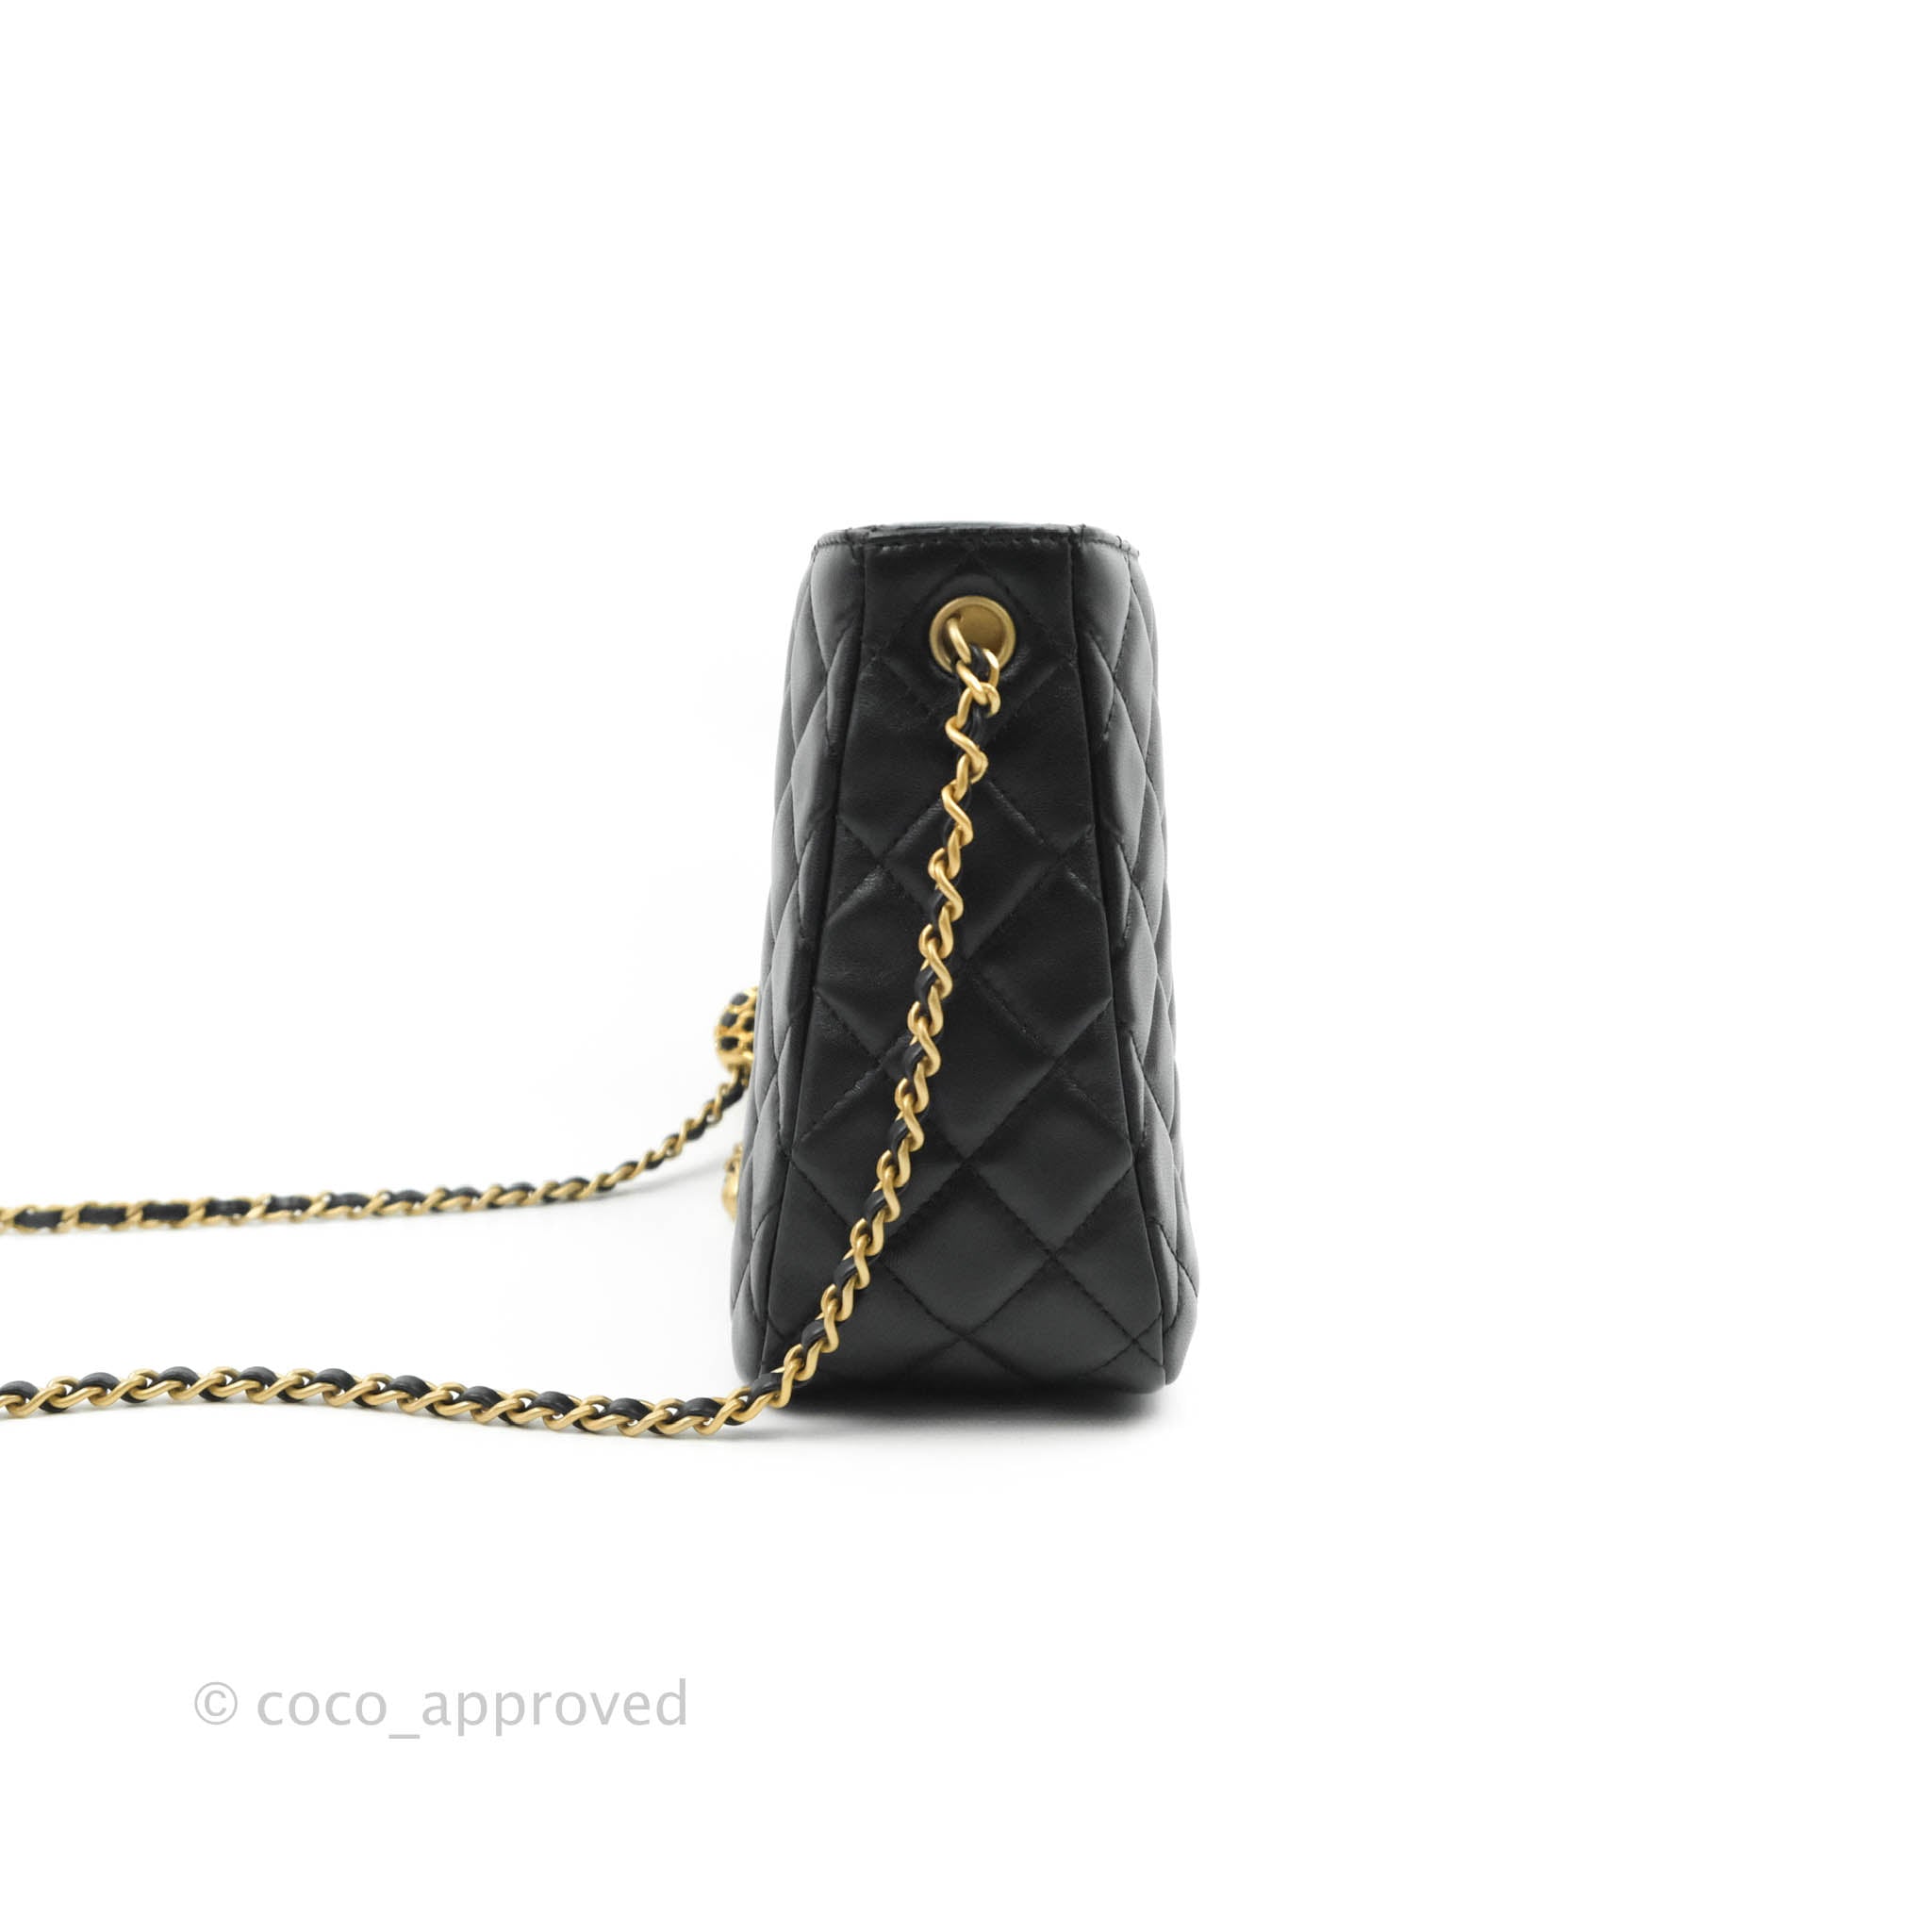 Brand New! Chanel 23K Large Hobo Bag. Microchip. 24*13*5cm.